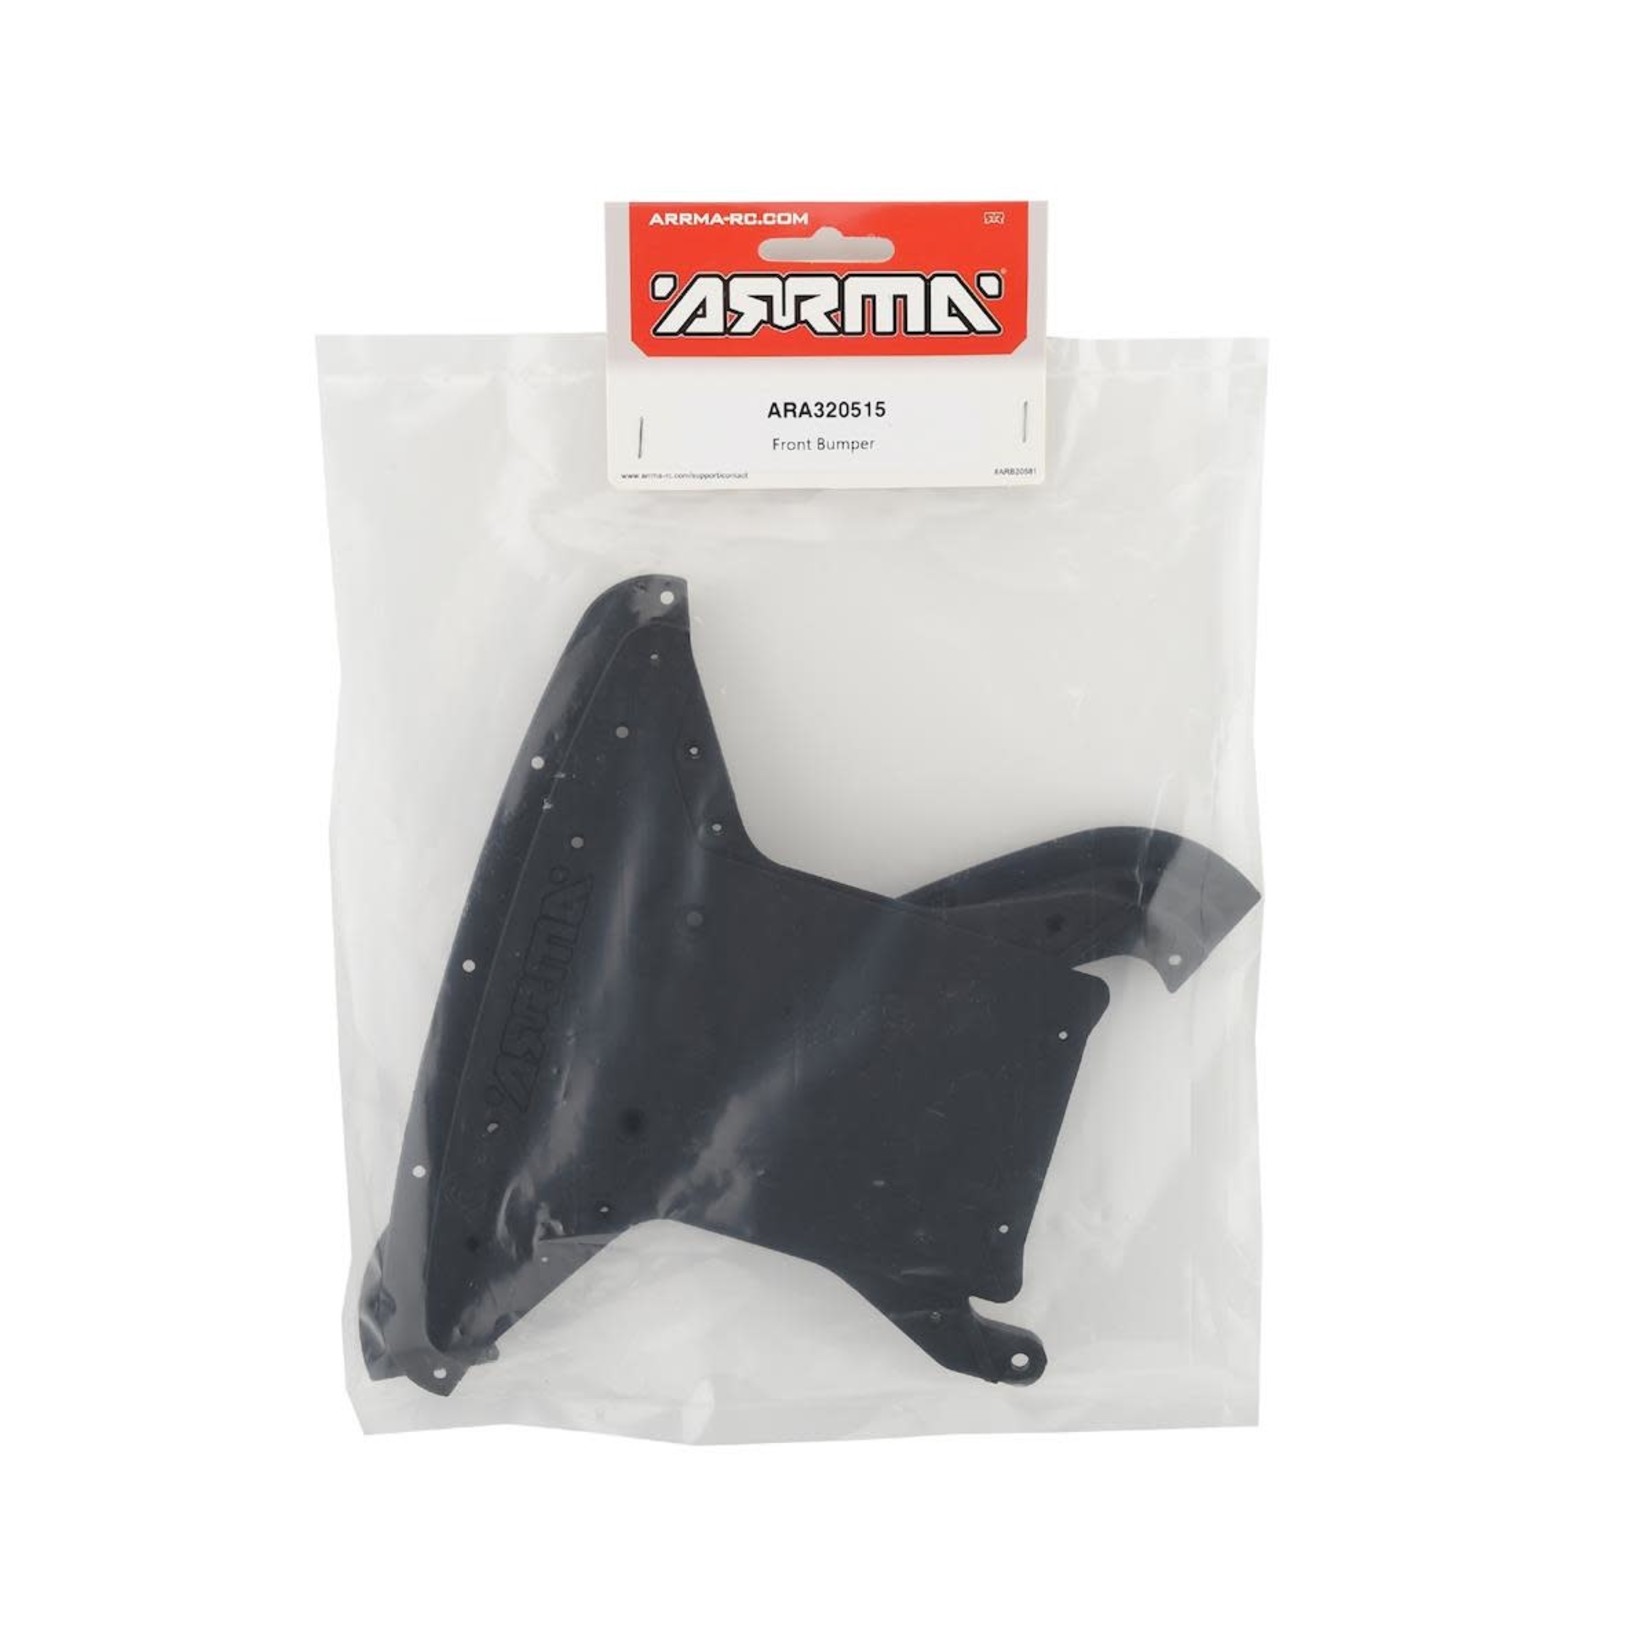 ARRMA Arrma Infraction/Limitless Front Bumper #ARA320515